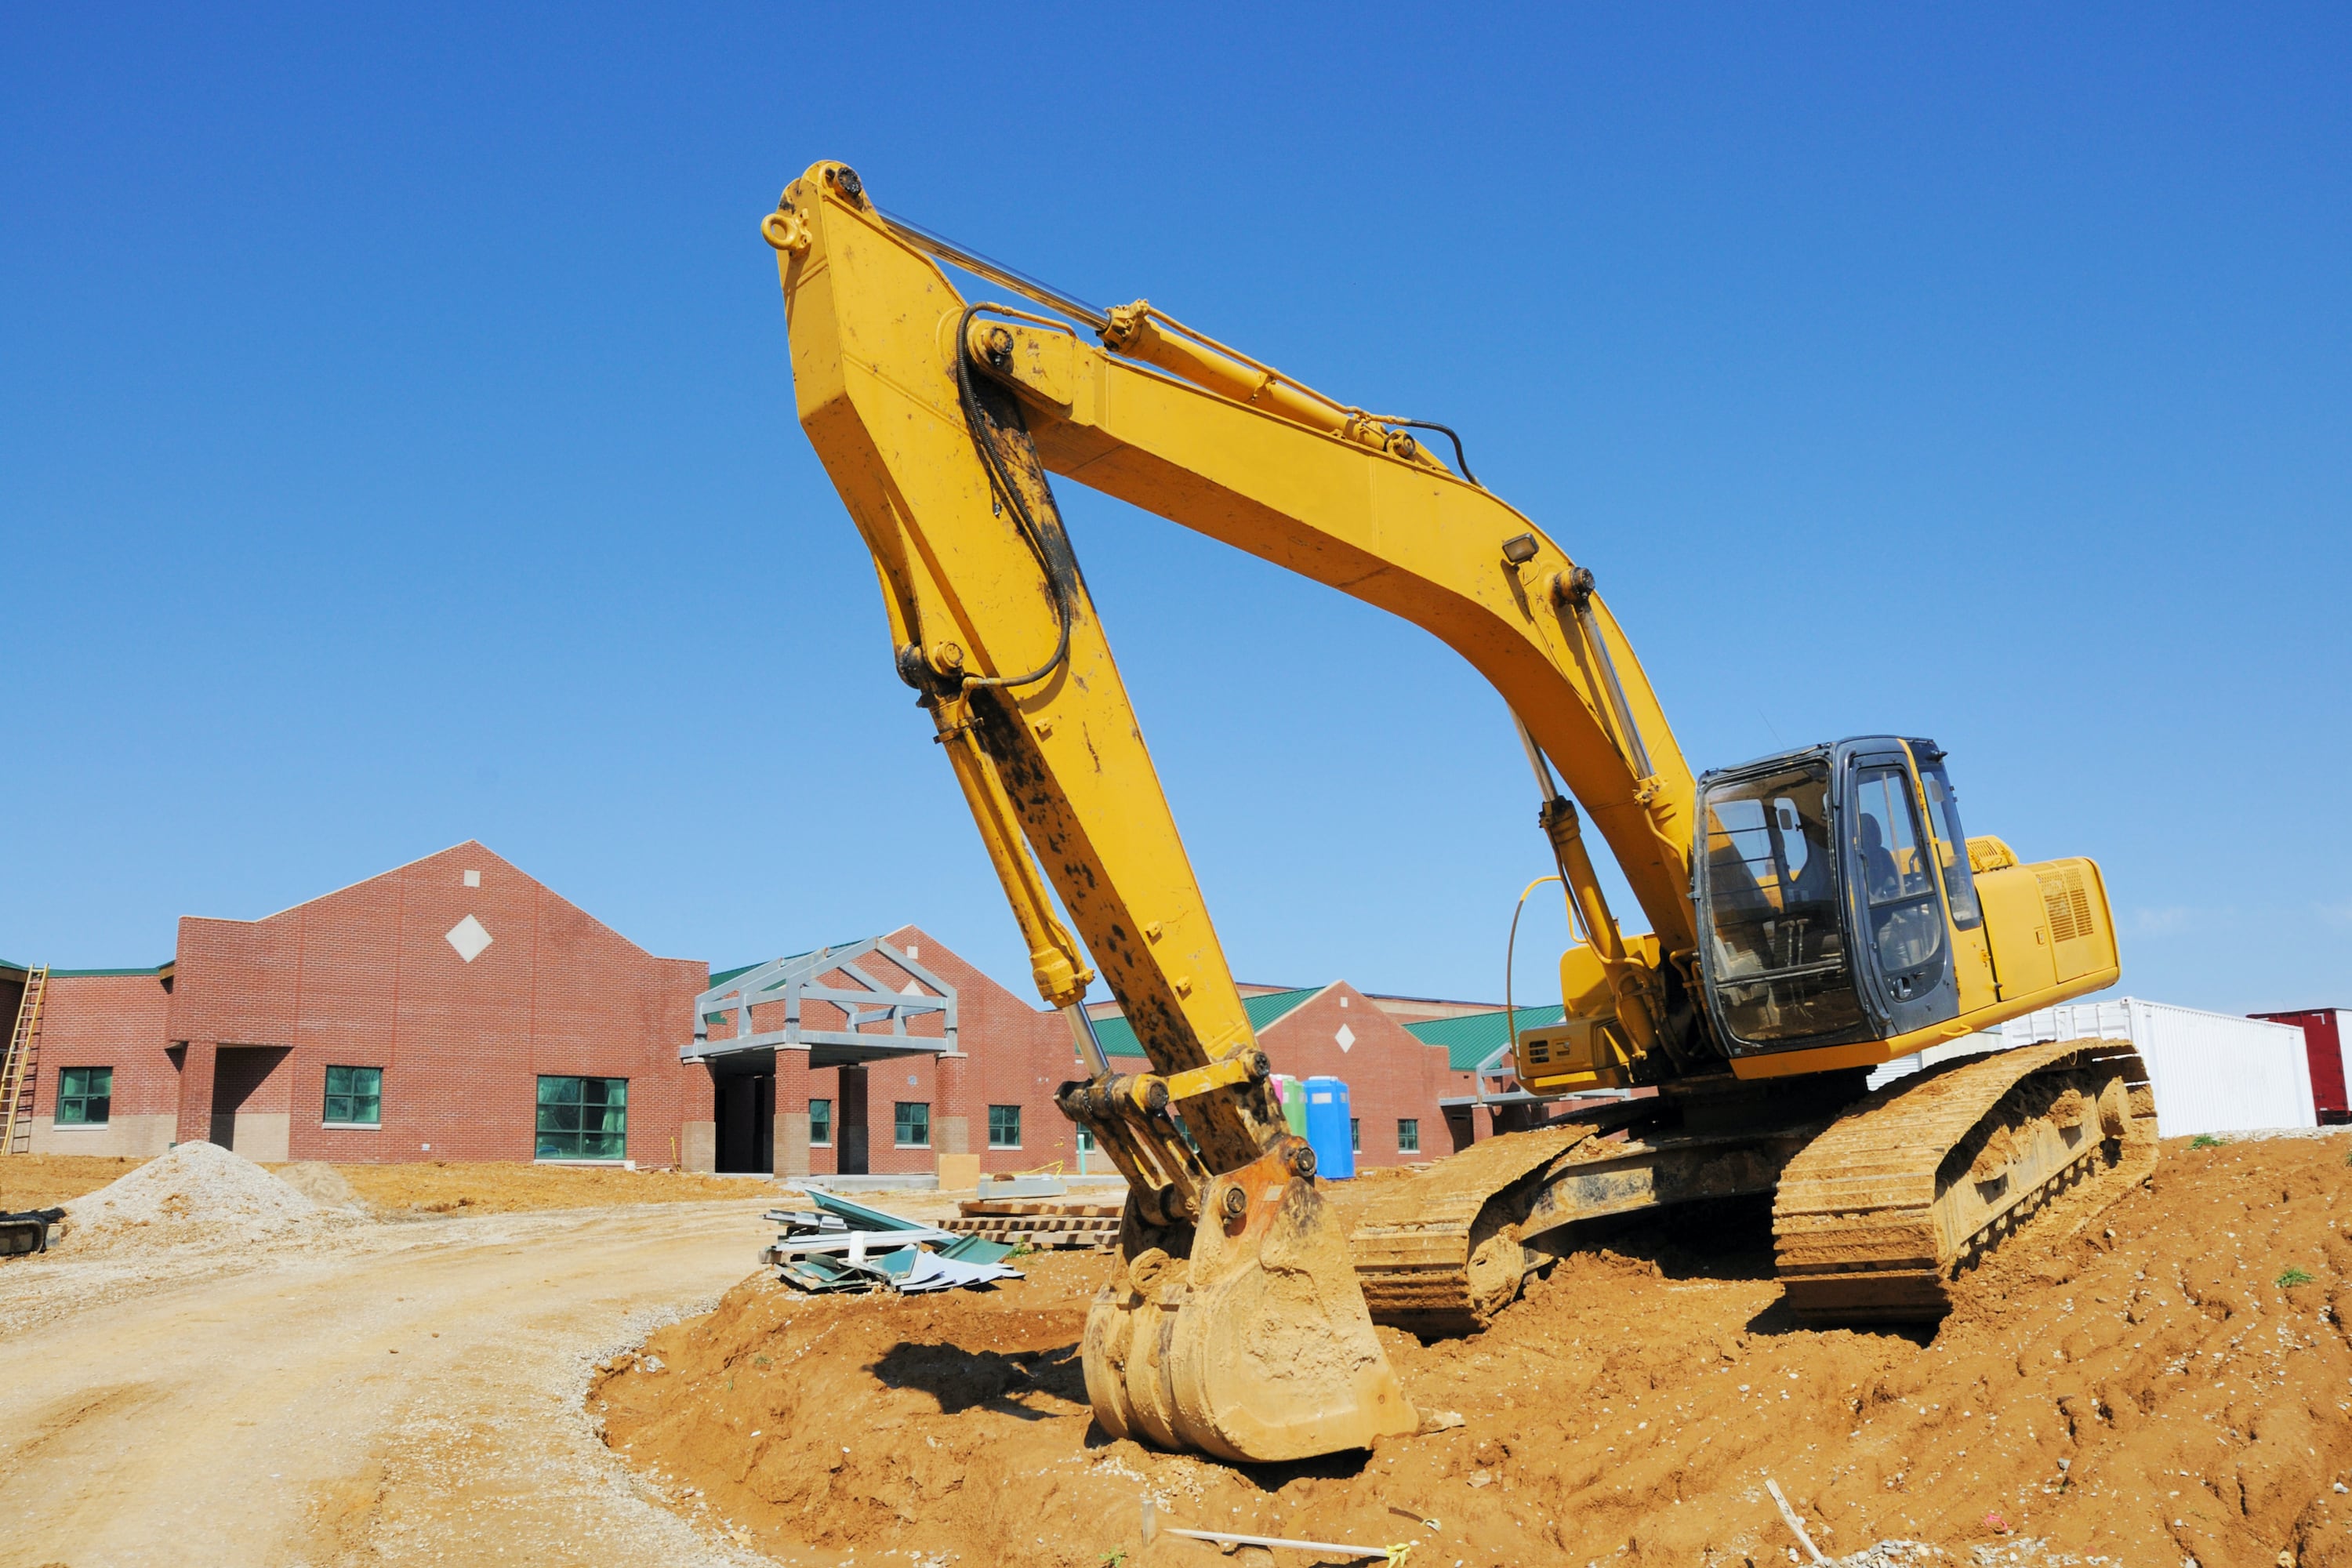 A bulldozer moves dirt at a school construction site.